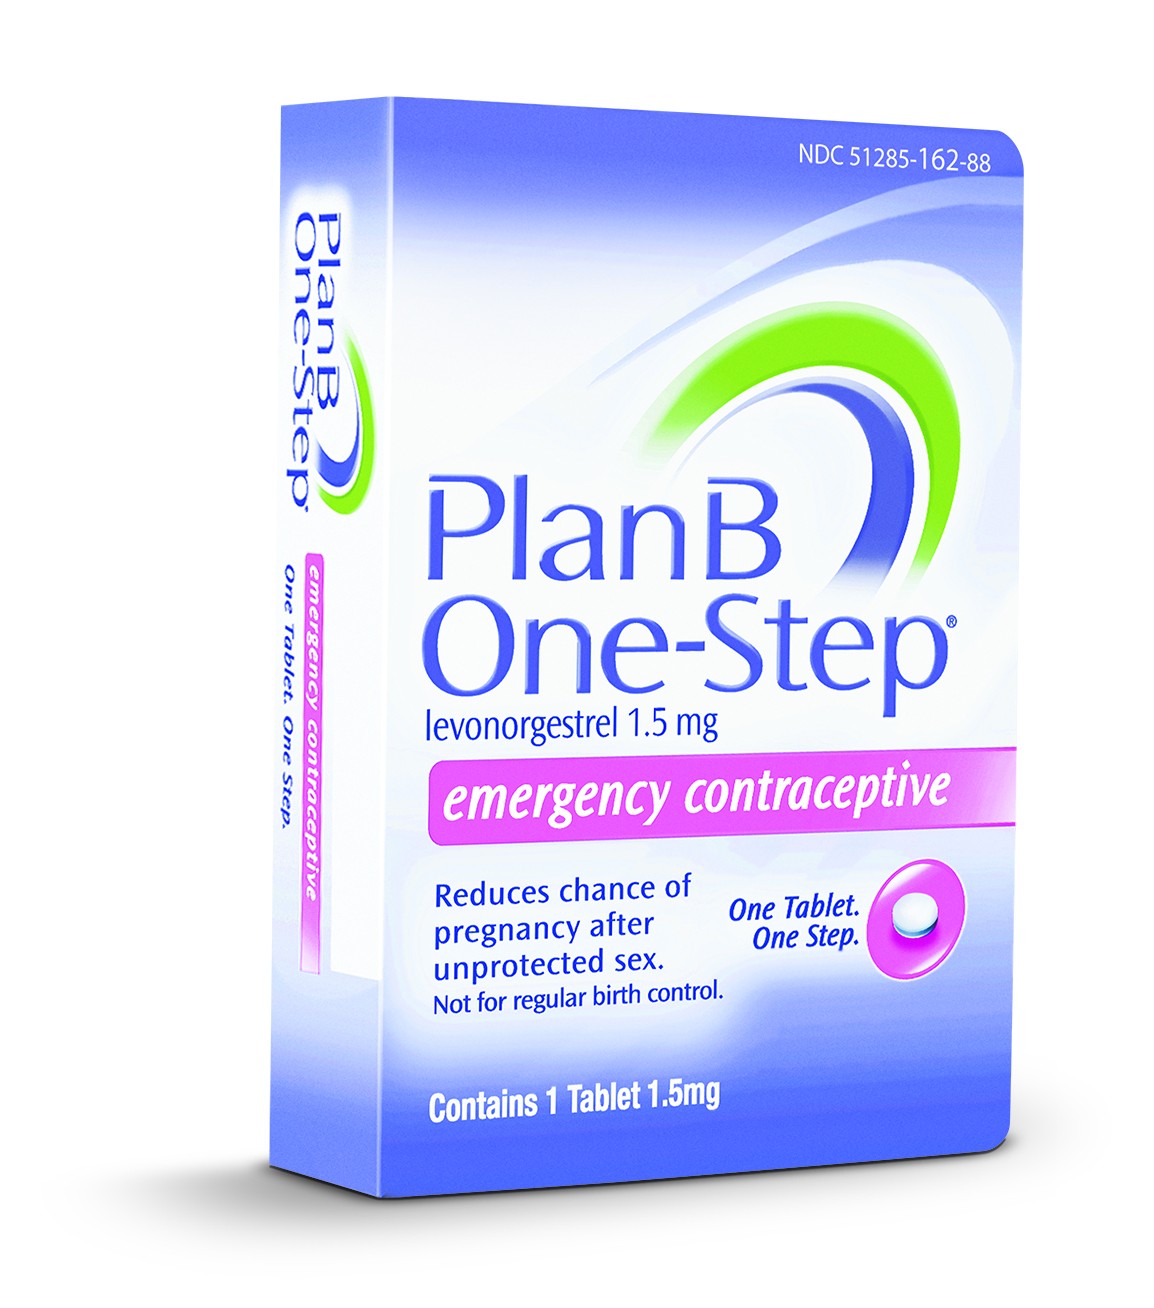 PlanB One-Step